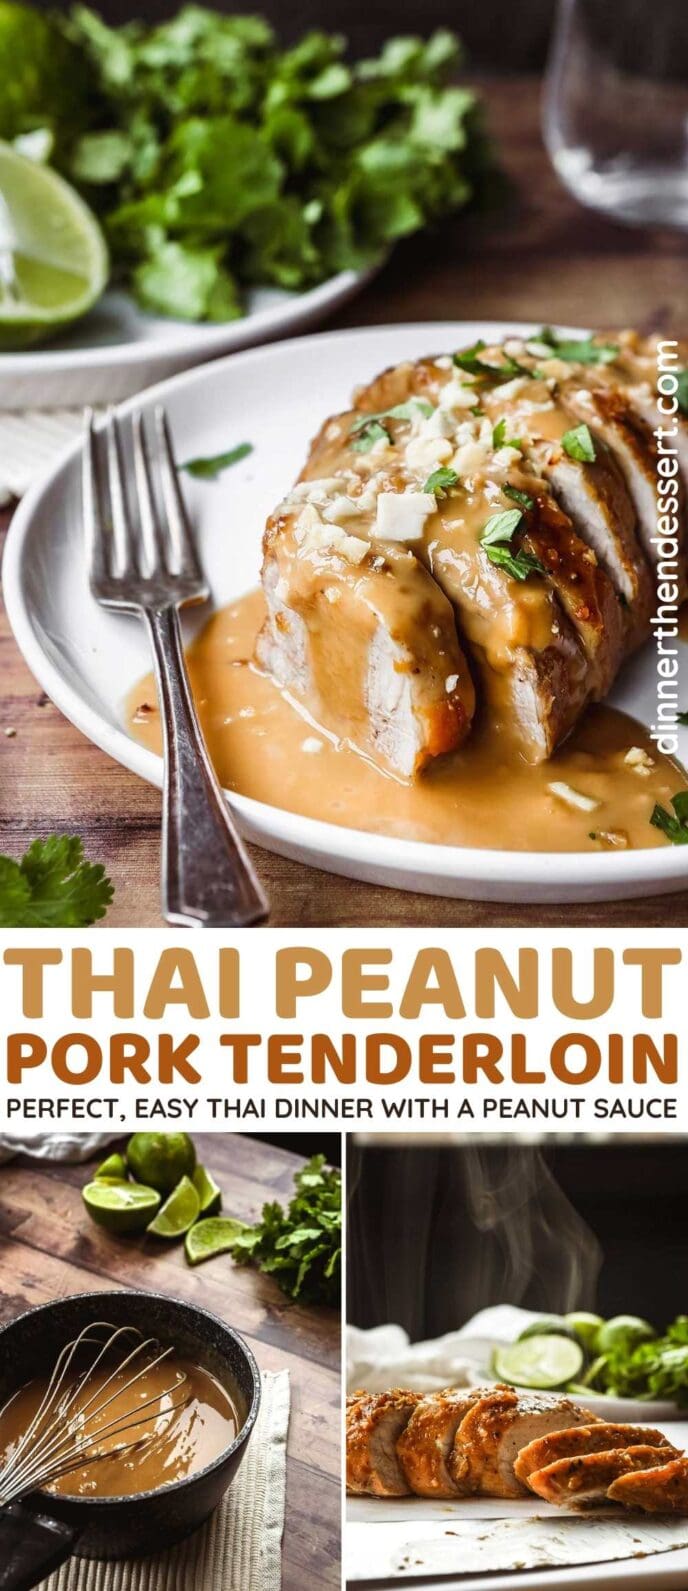 Thai Peanut Pork Tenderloin collage